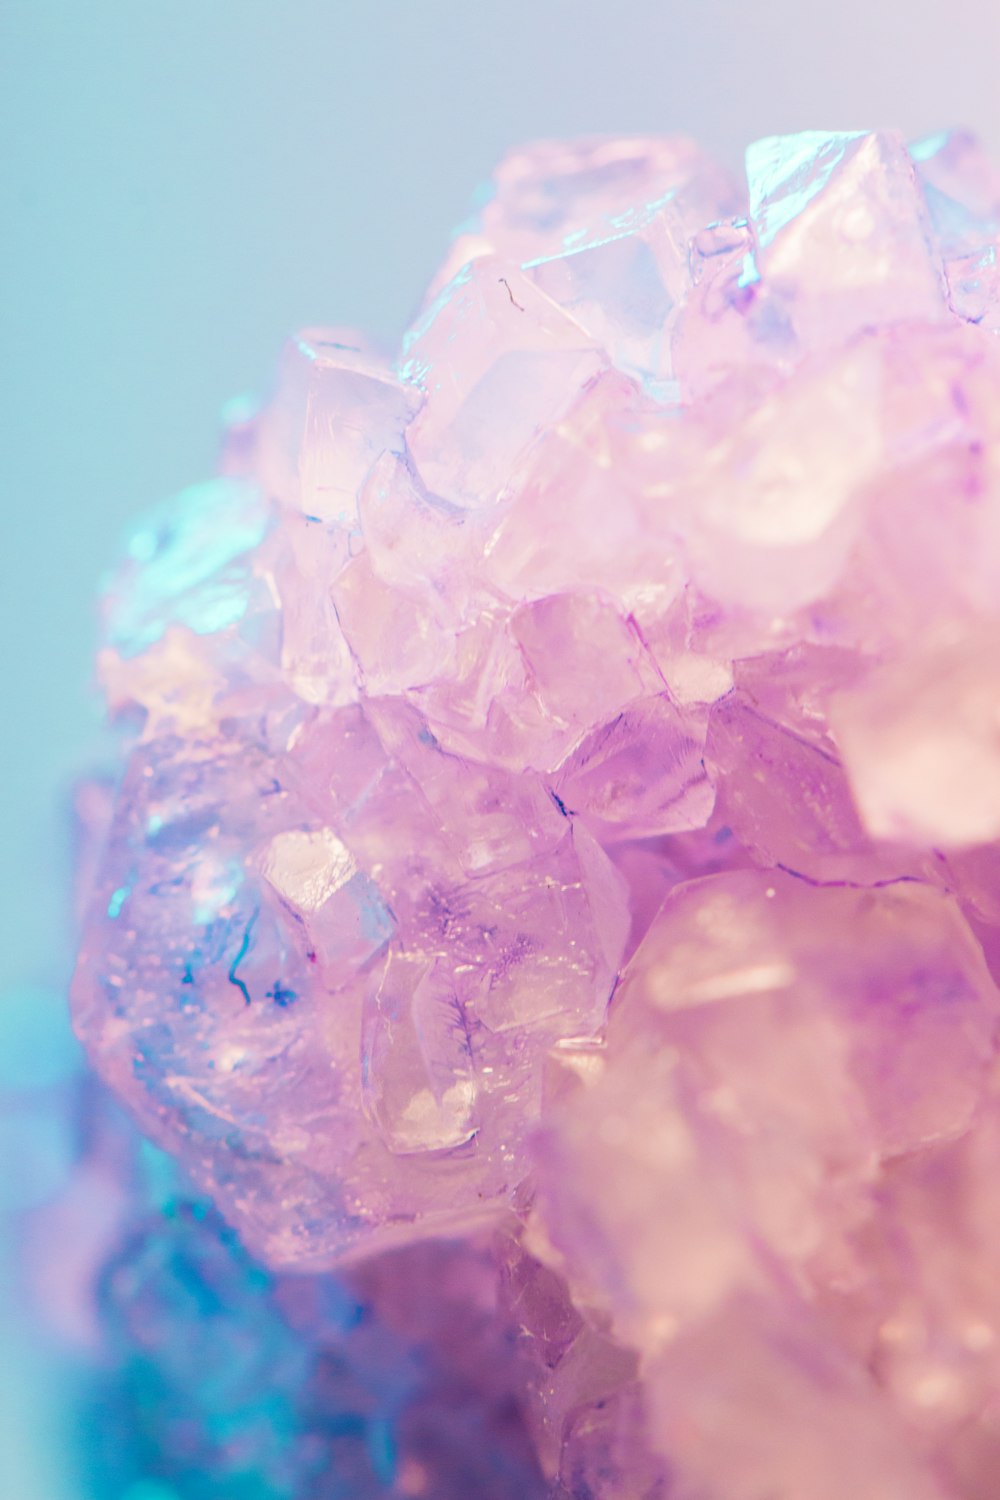 Pink Crystal Pictures | Download Free Images on Unsplash